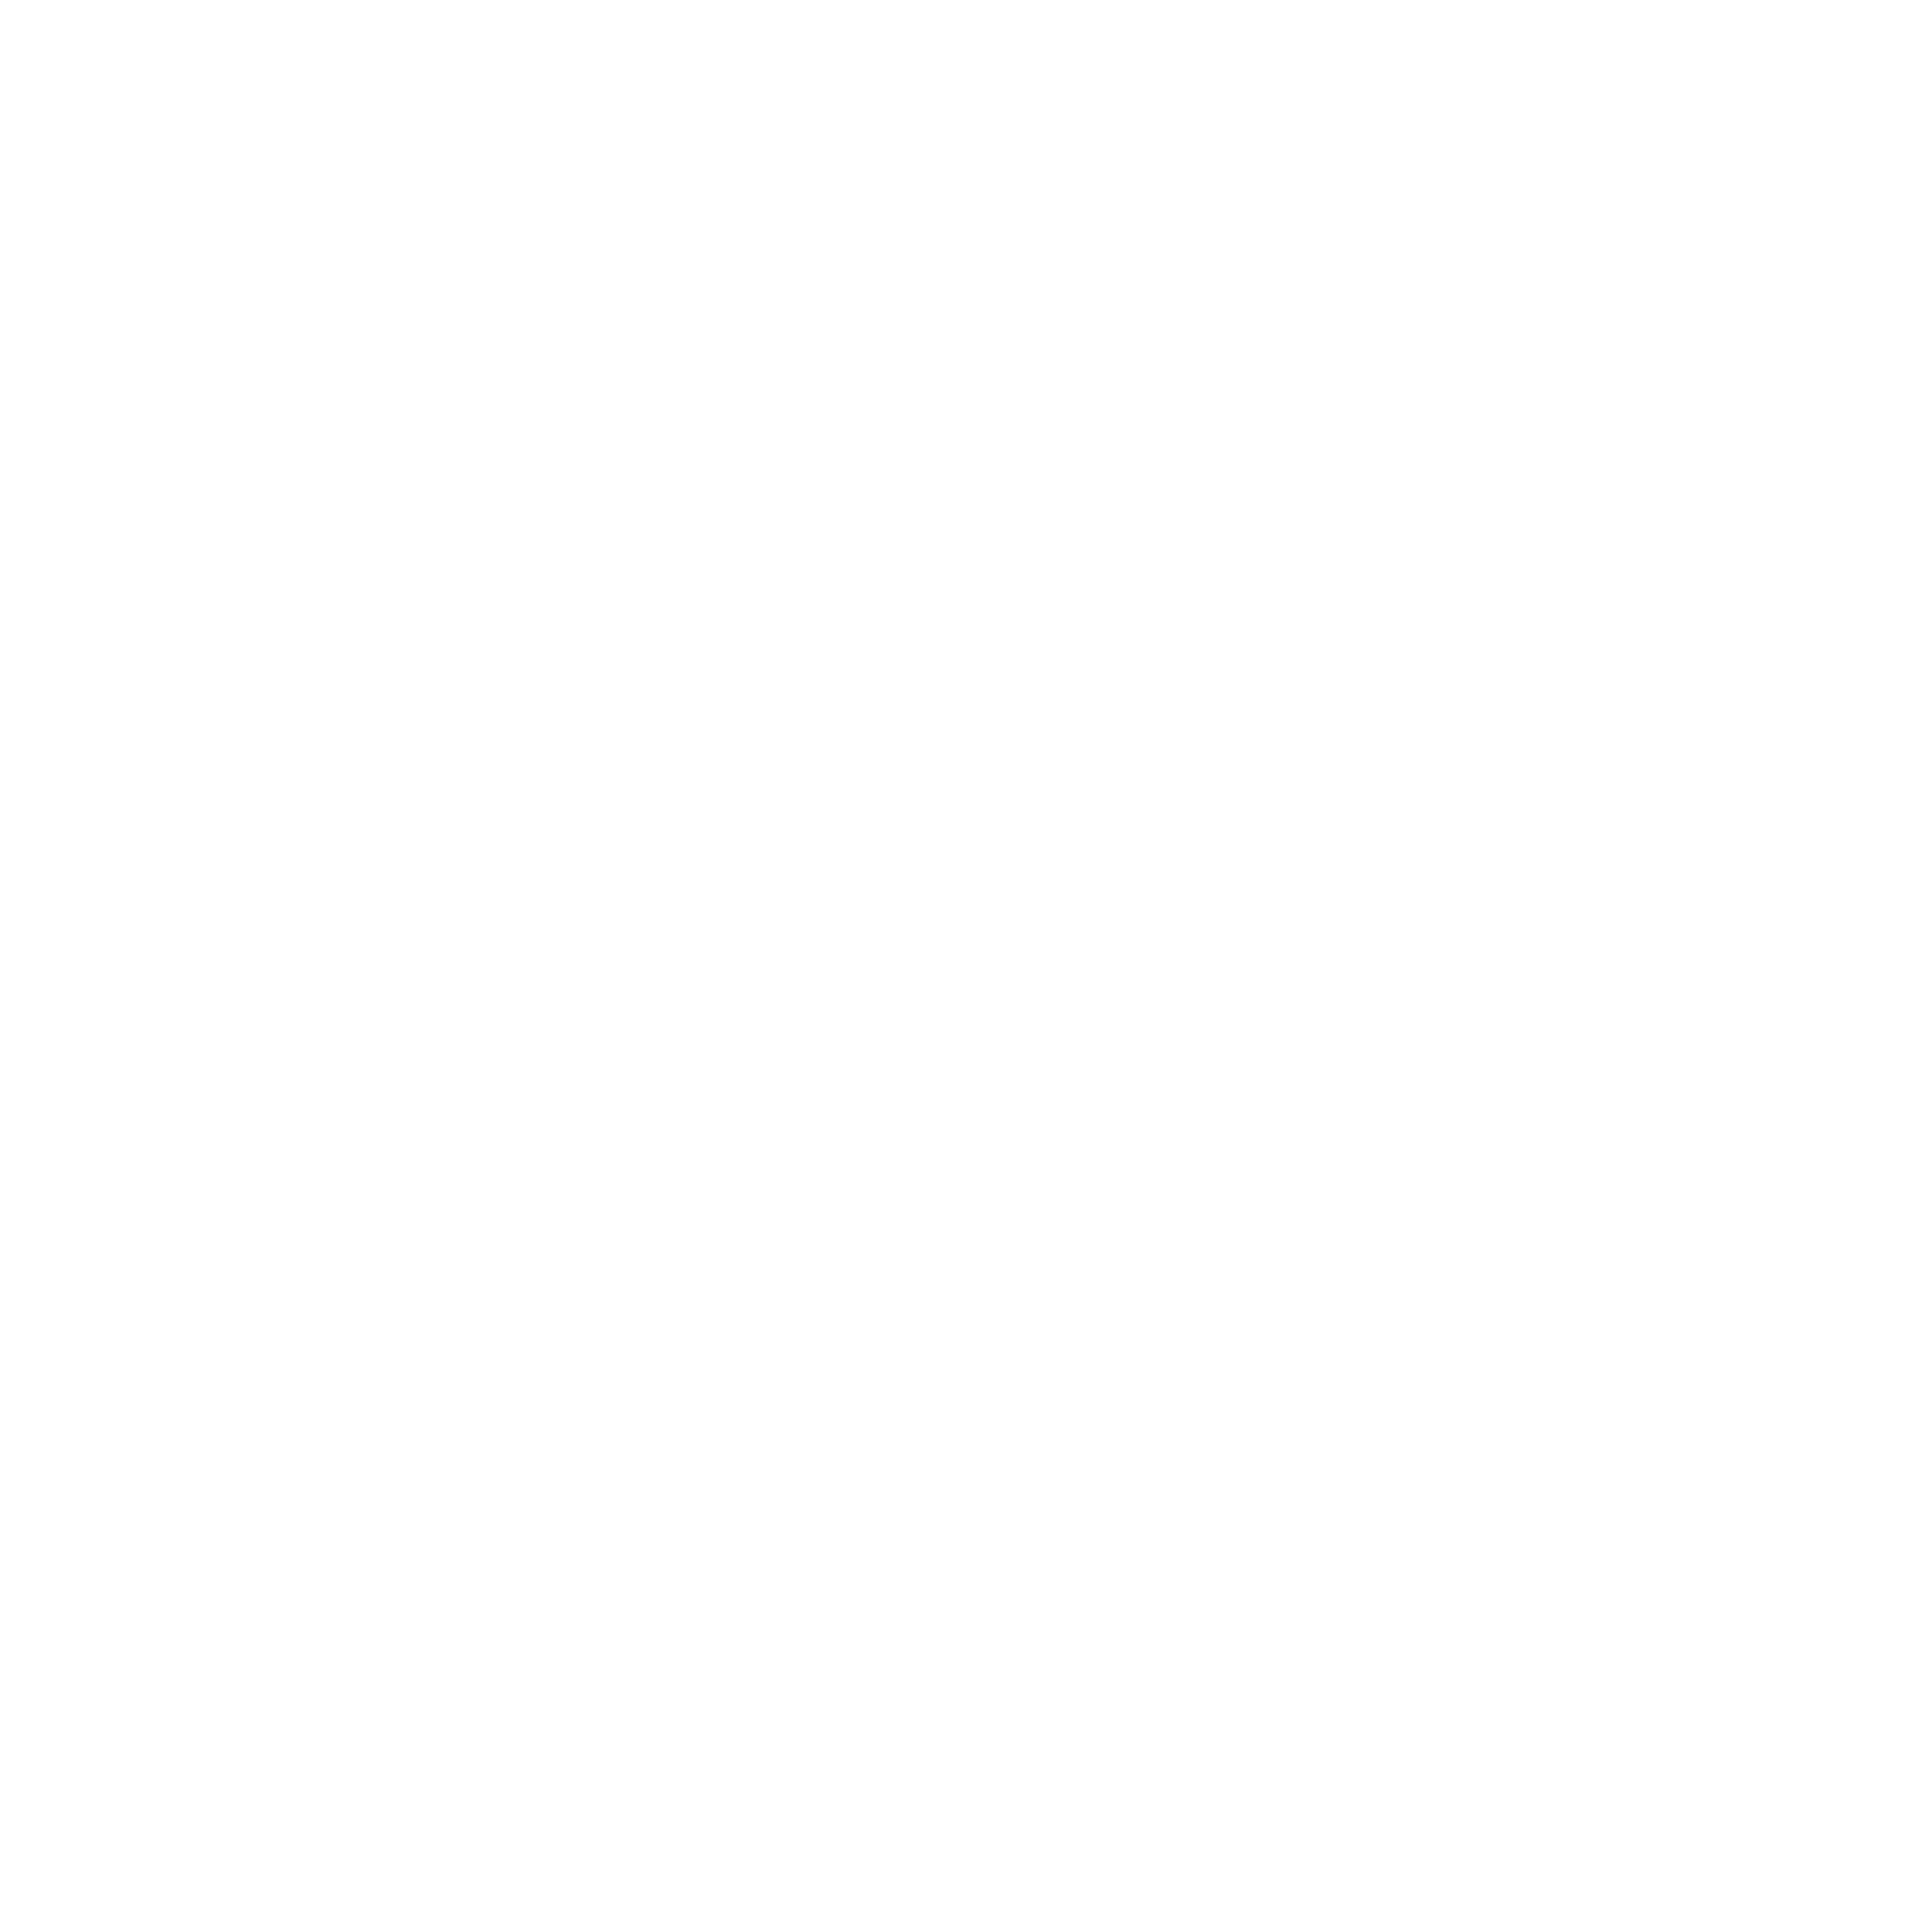 Fry's Electronics Logo - Fry's Electronics Logo PNG Transparent & SVG Vector - Freebie Supply